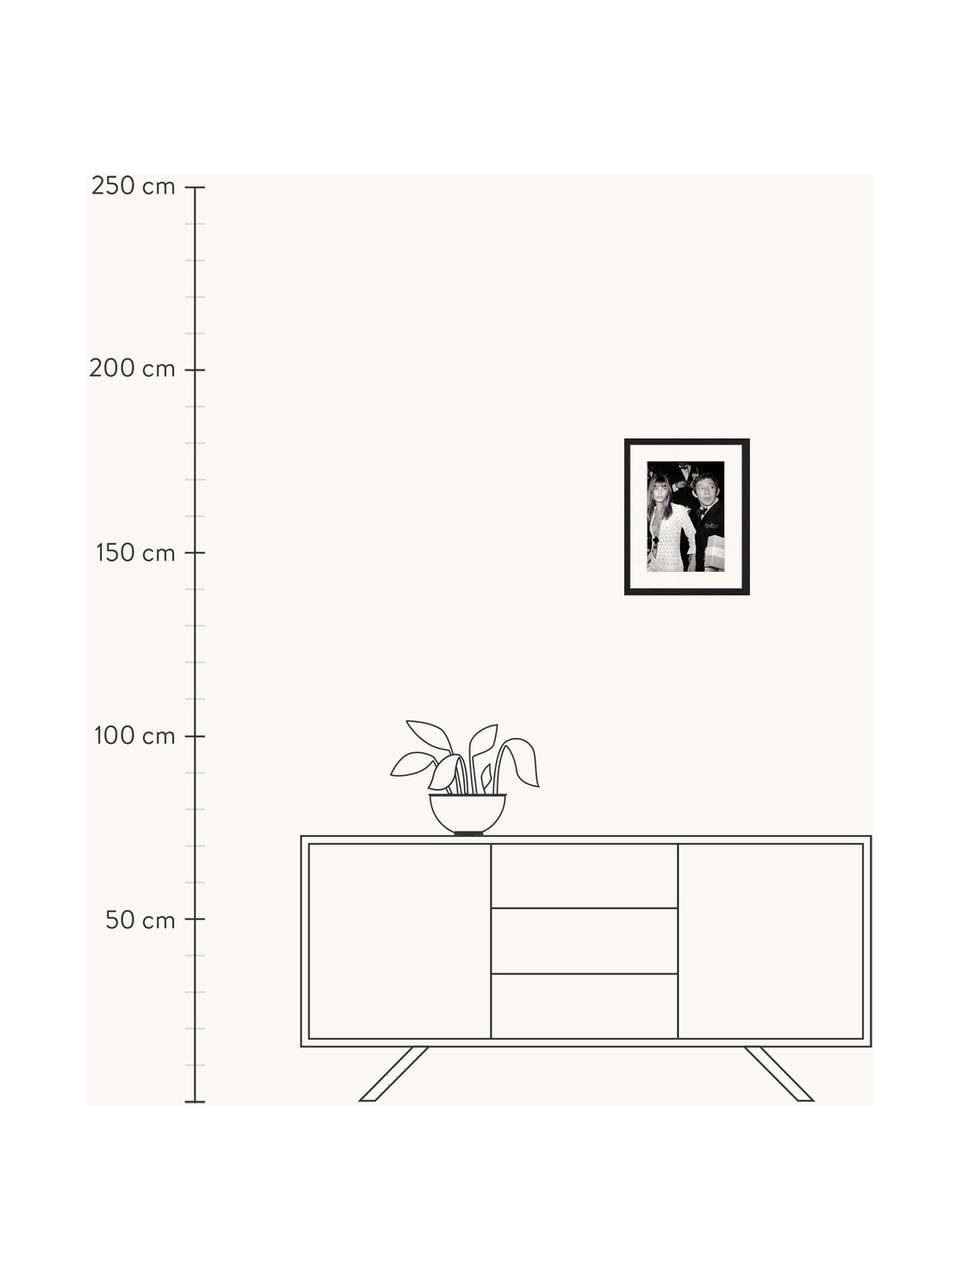 Gerahmte Fotografie Serge Gainsbourg & Jane Birkin, Rahmen: Buchenholz, FSC zertifizi, Bild: Digitaldruck auf Papier, , Front: Acrylglas, Schwarz, Off White, B 33 x H 43 cm